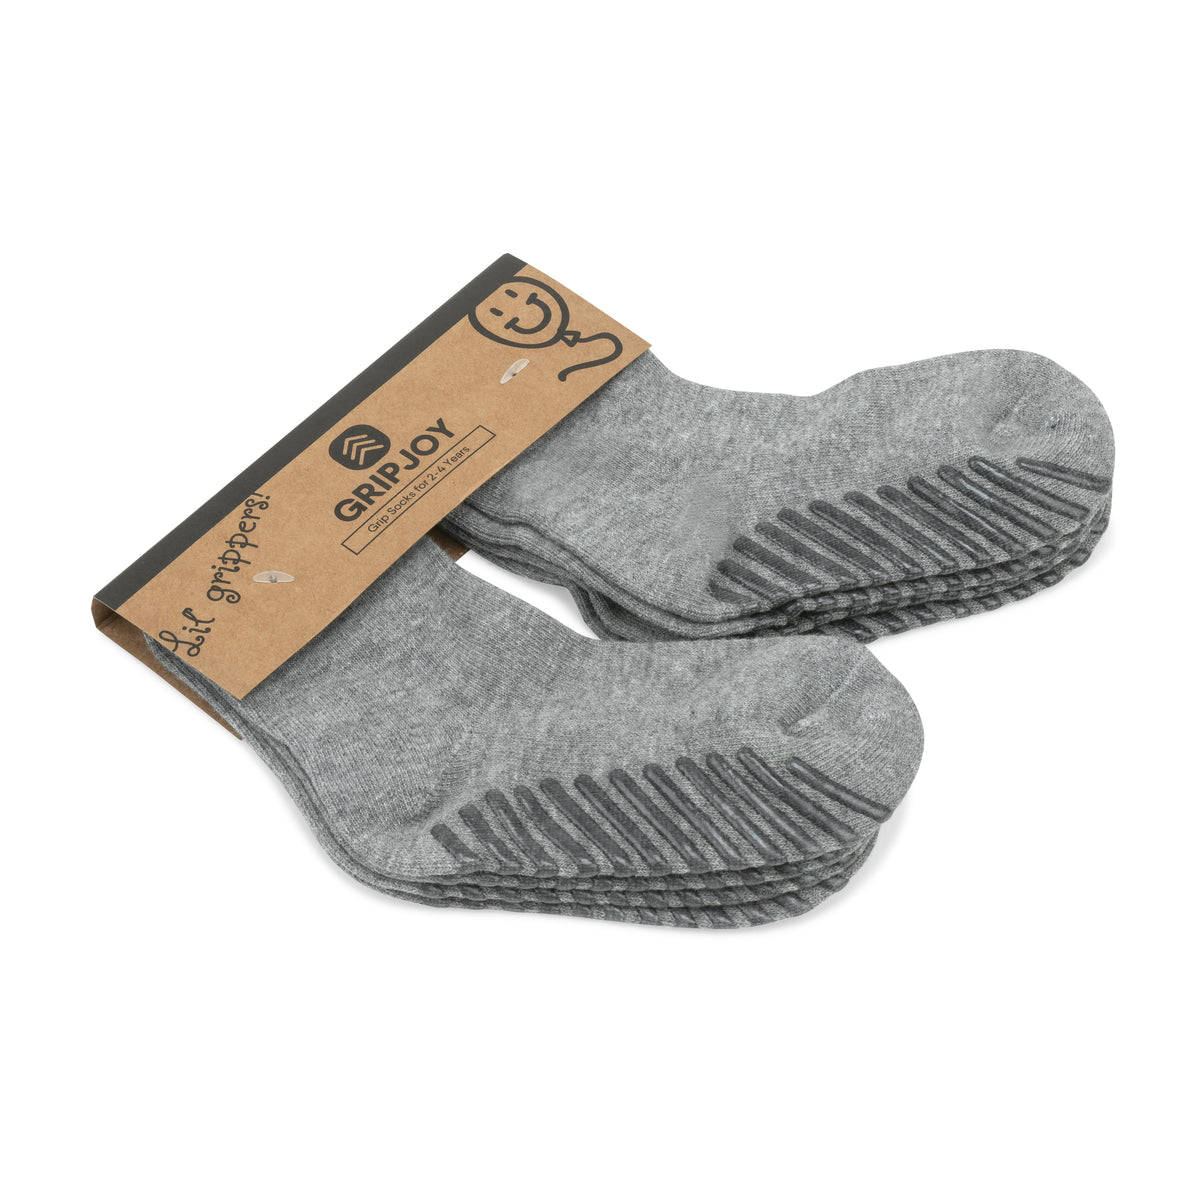 Light Grey Grip Socks for Toddlers &amp; Kids - 4 pairs - Gripjoy Socks